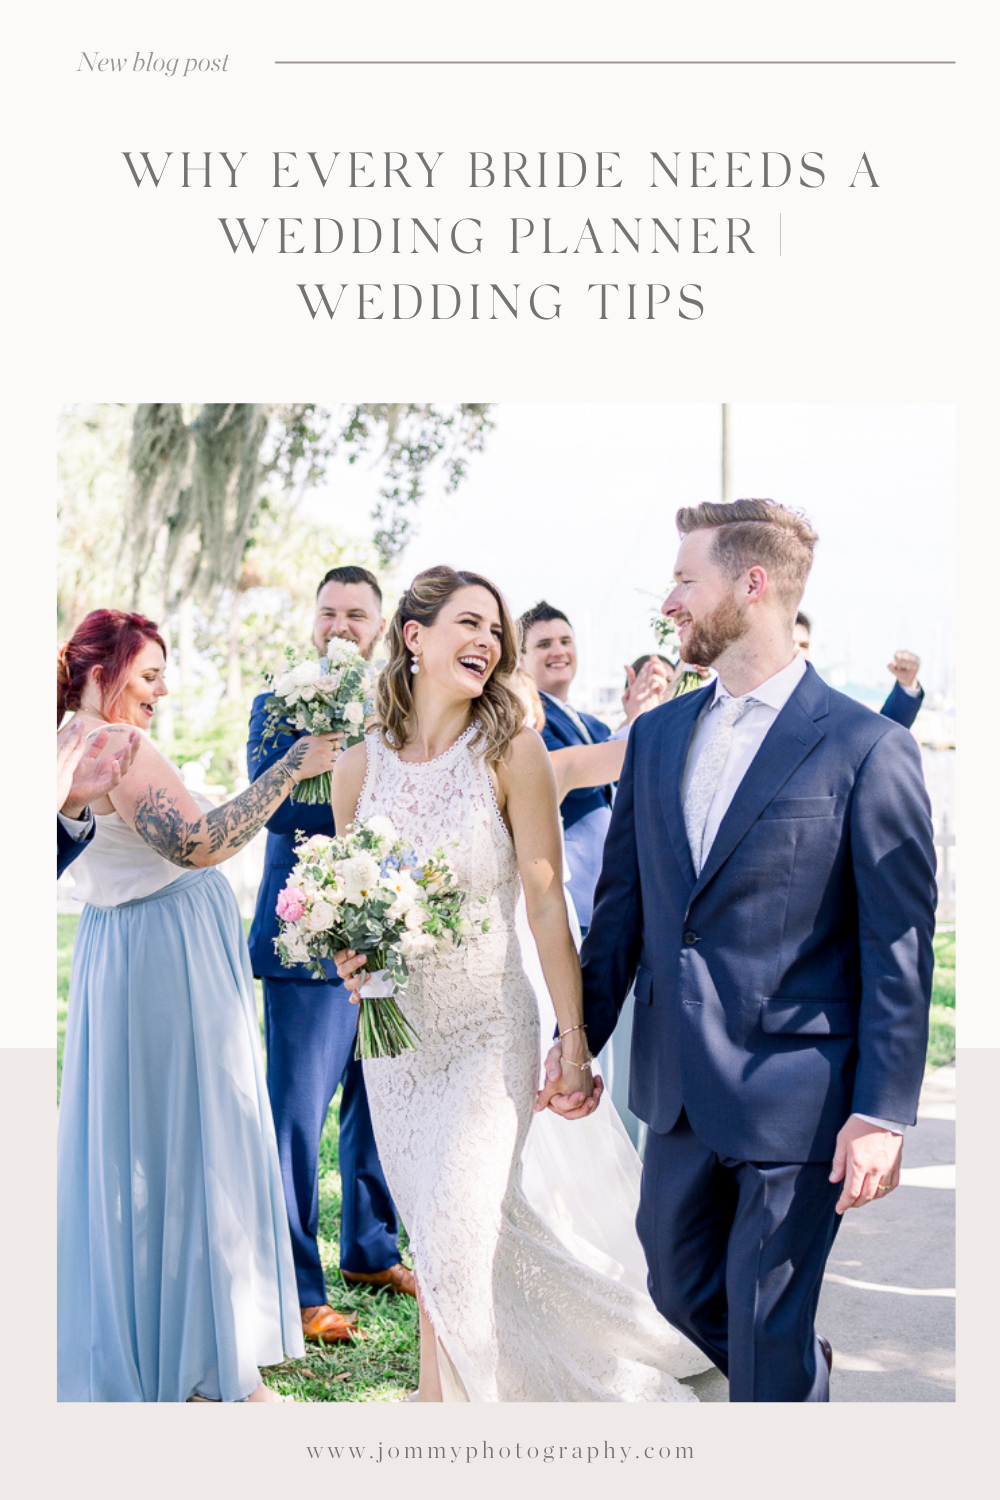 Every Bride needs a wedding planner